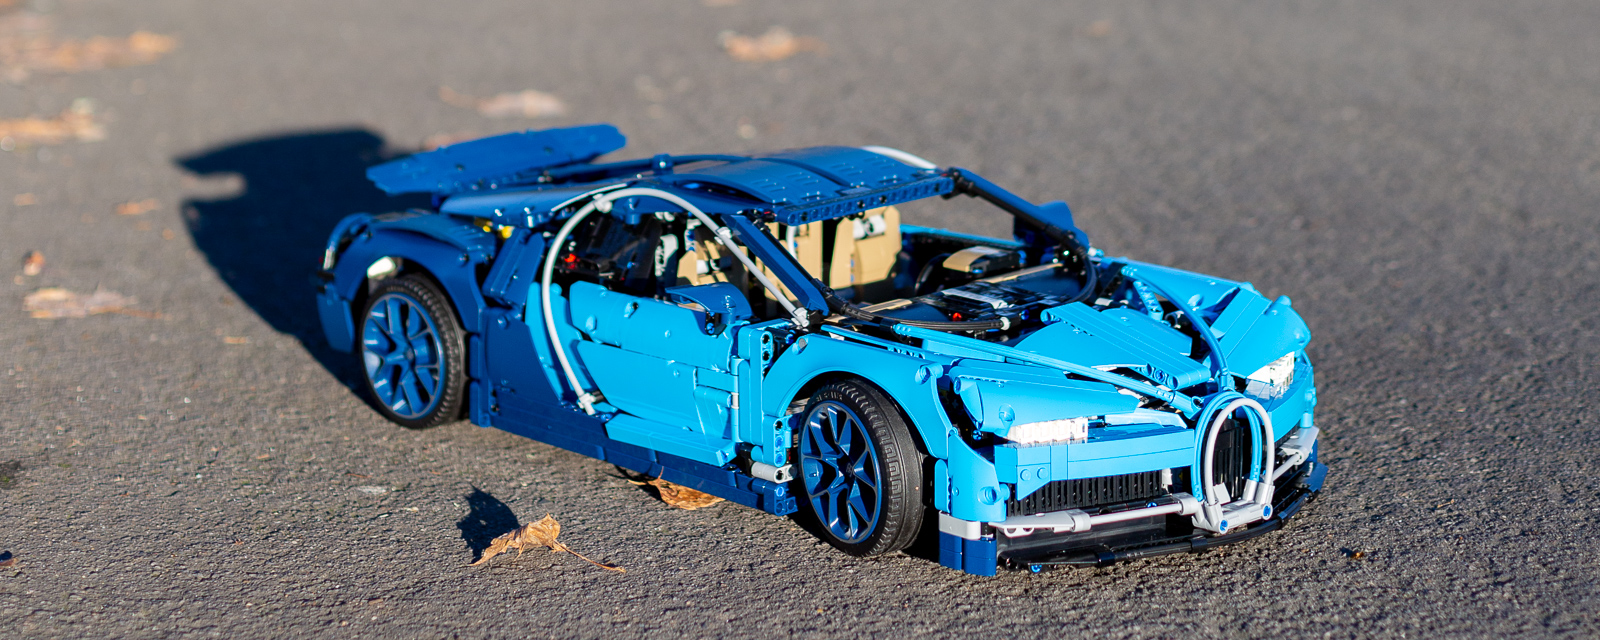 sløring mudder Minimer Review: #42083 Bugatti Chiron - BRICK ARCHITECT